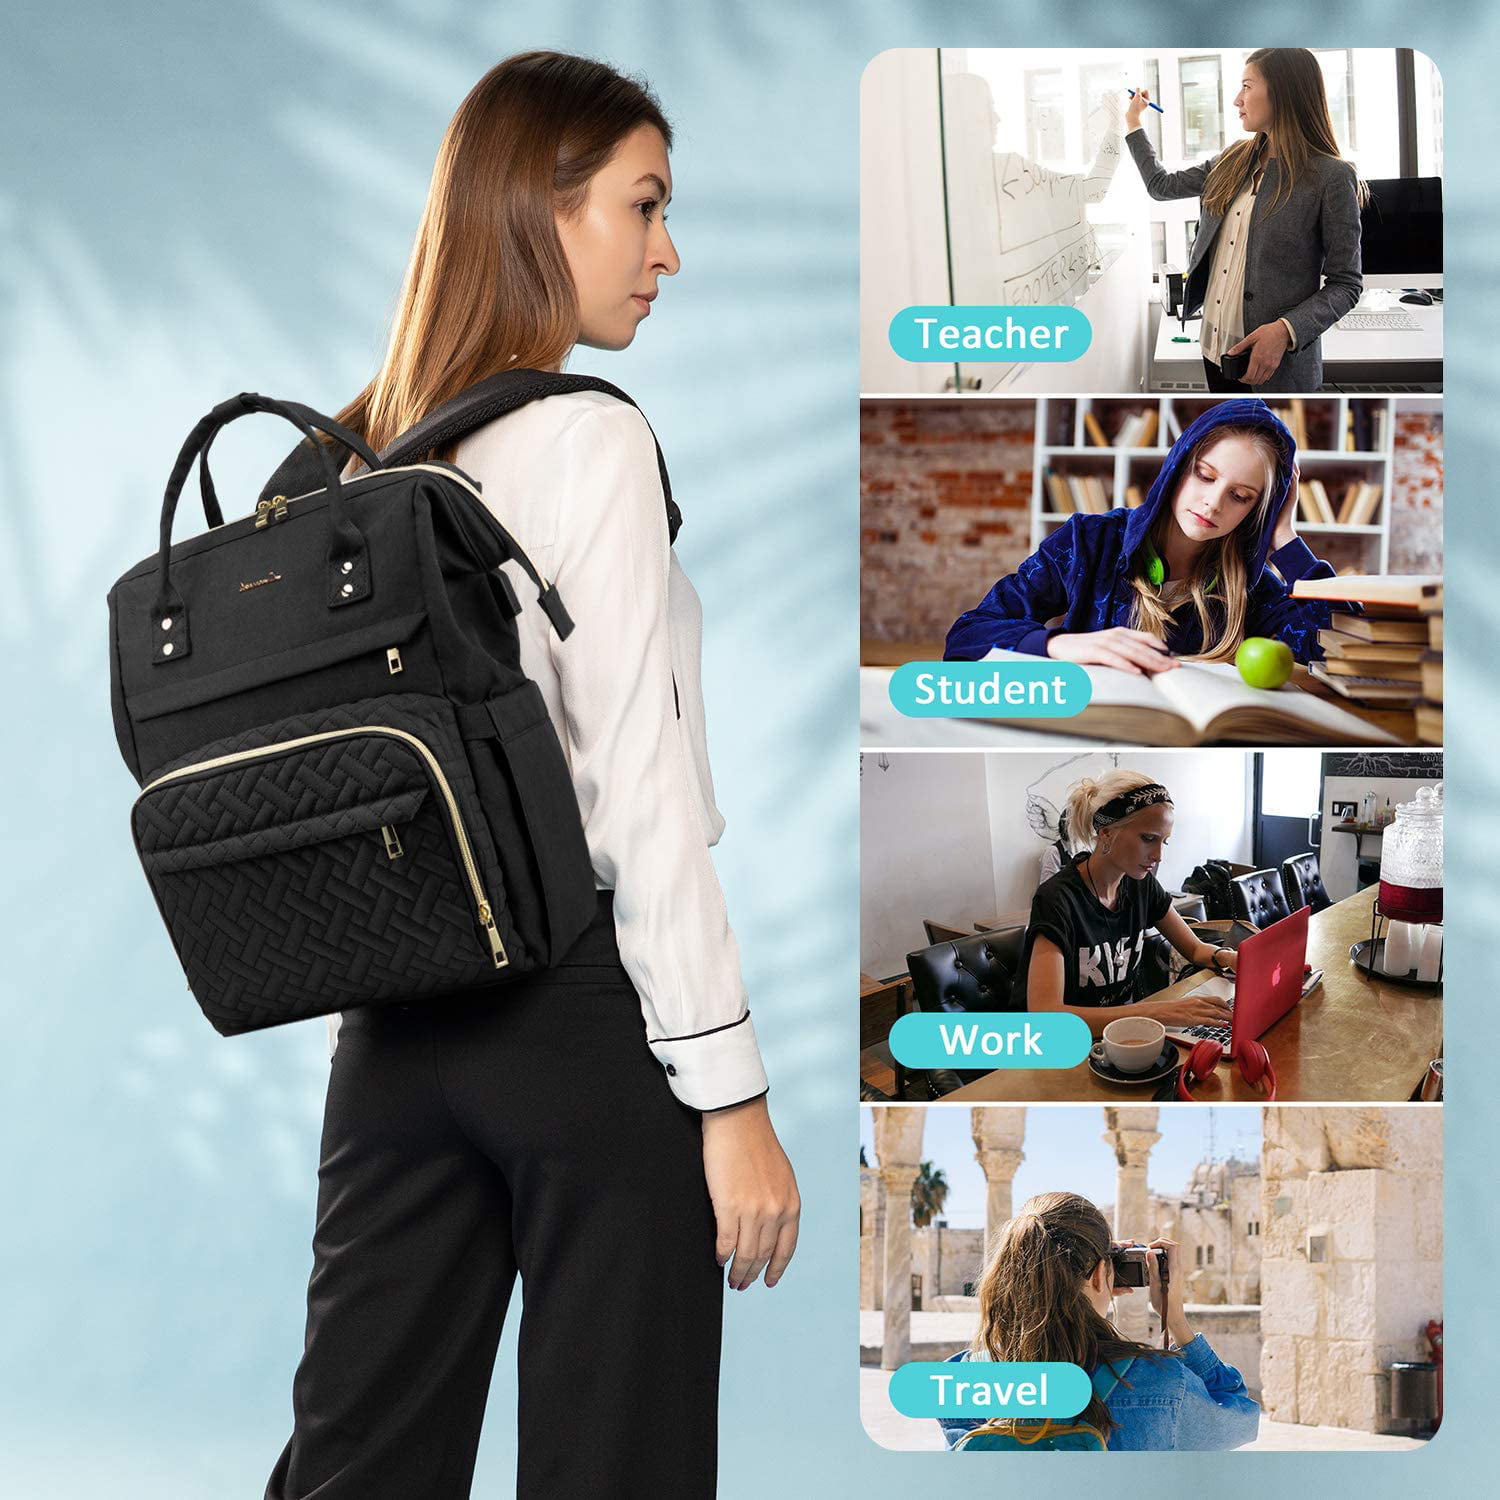 LOVEVOOK Laptop Backpack for Women Fashion Business Computer Backpacks Travel Bags Purse Student Bookbag Teacher Doctor Nurse Work Backpack with USB Port Fits 15.6-Inch Laptop Black 